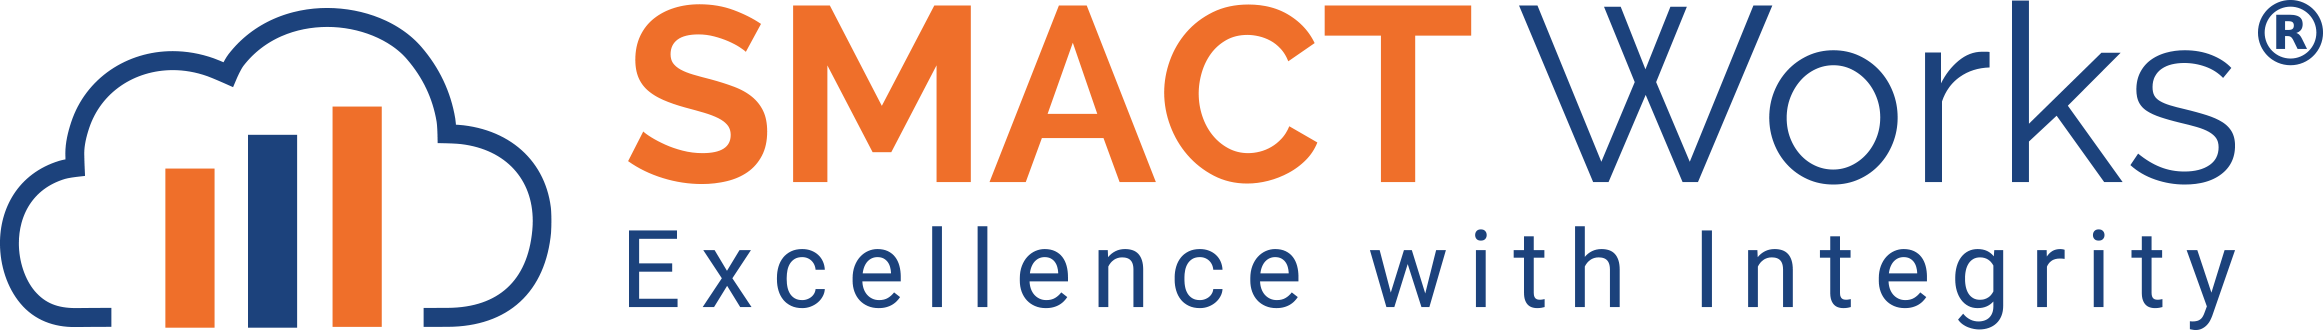 SMACT Works Sponsor Logo